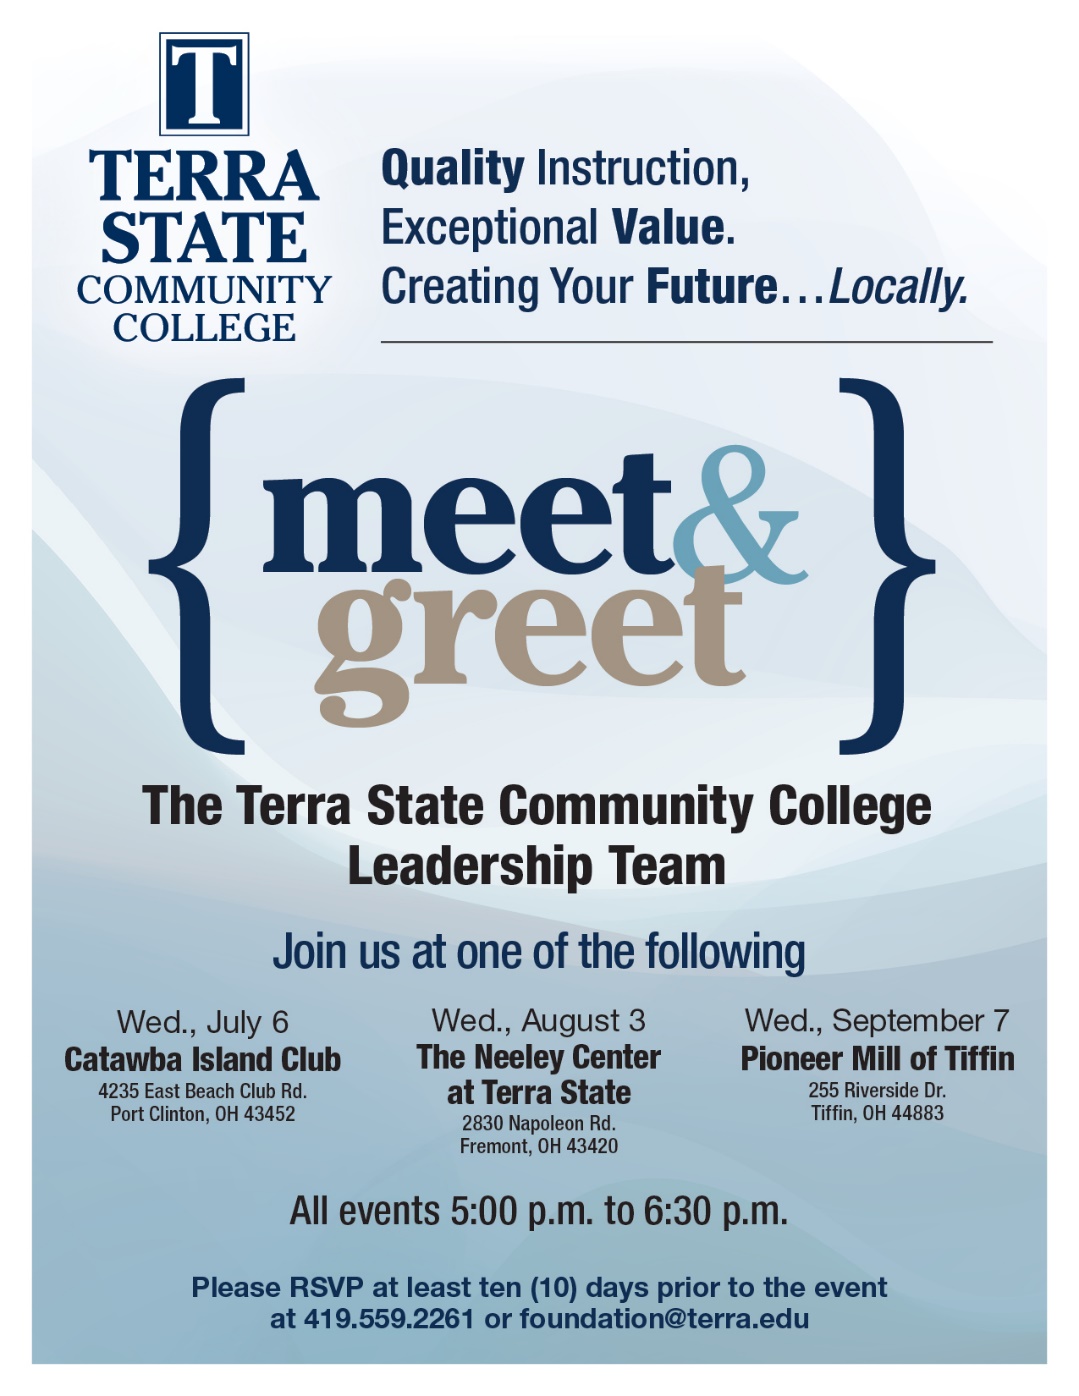 Terra State Community College Meet & Greet